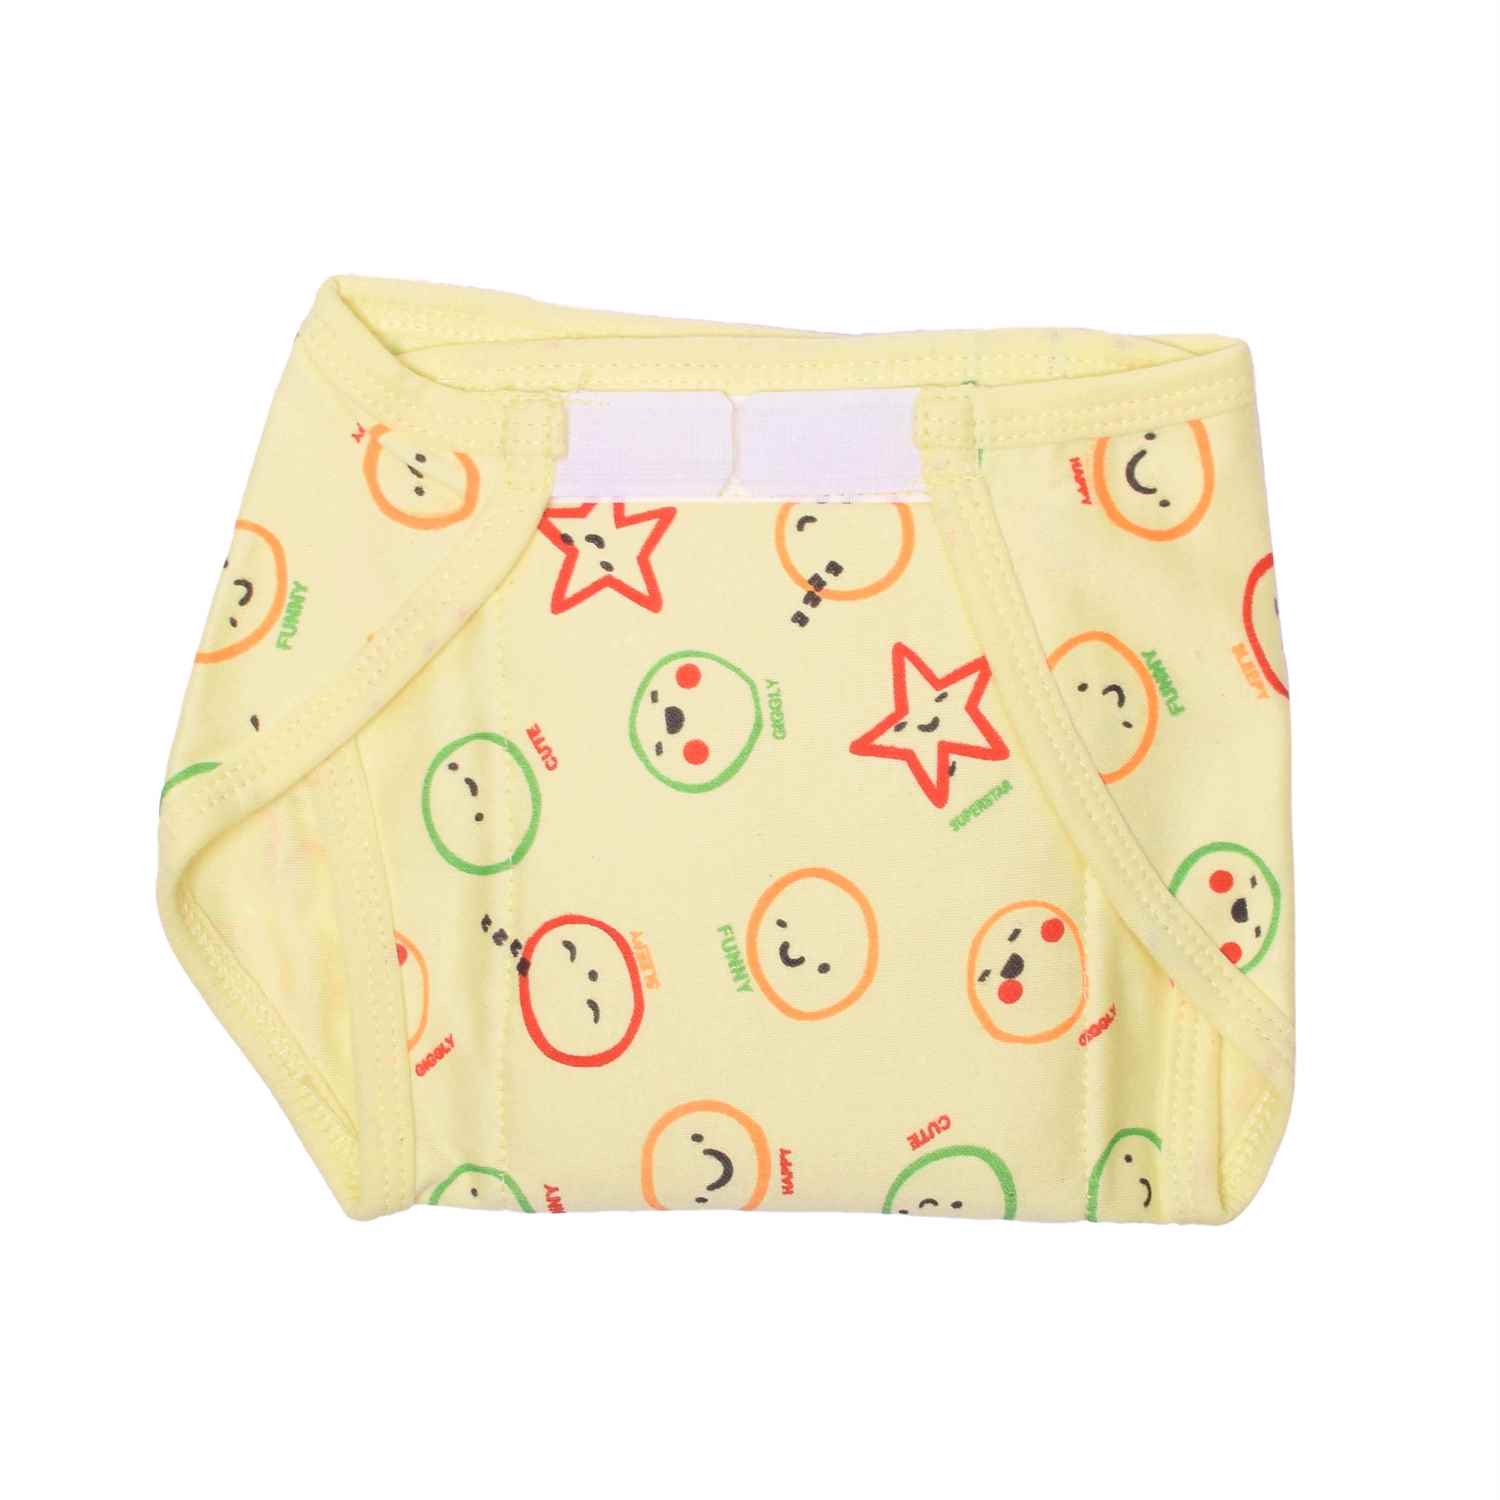 COZYCARE Washable Diapers Hosiery Velcro Emoji Print Pink, Orange & Yellow 3P Set (M)